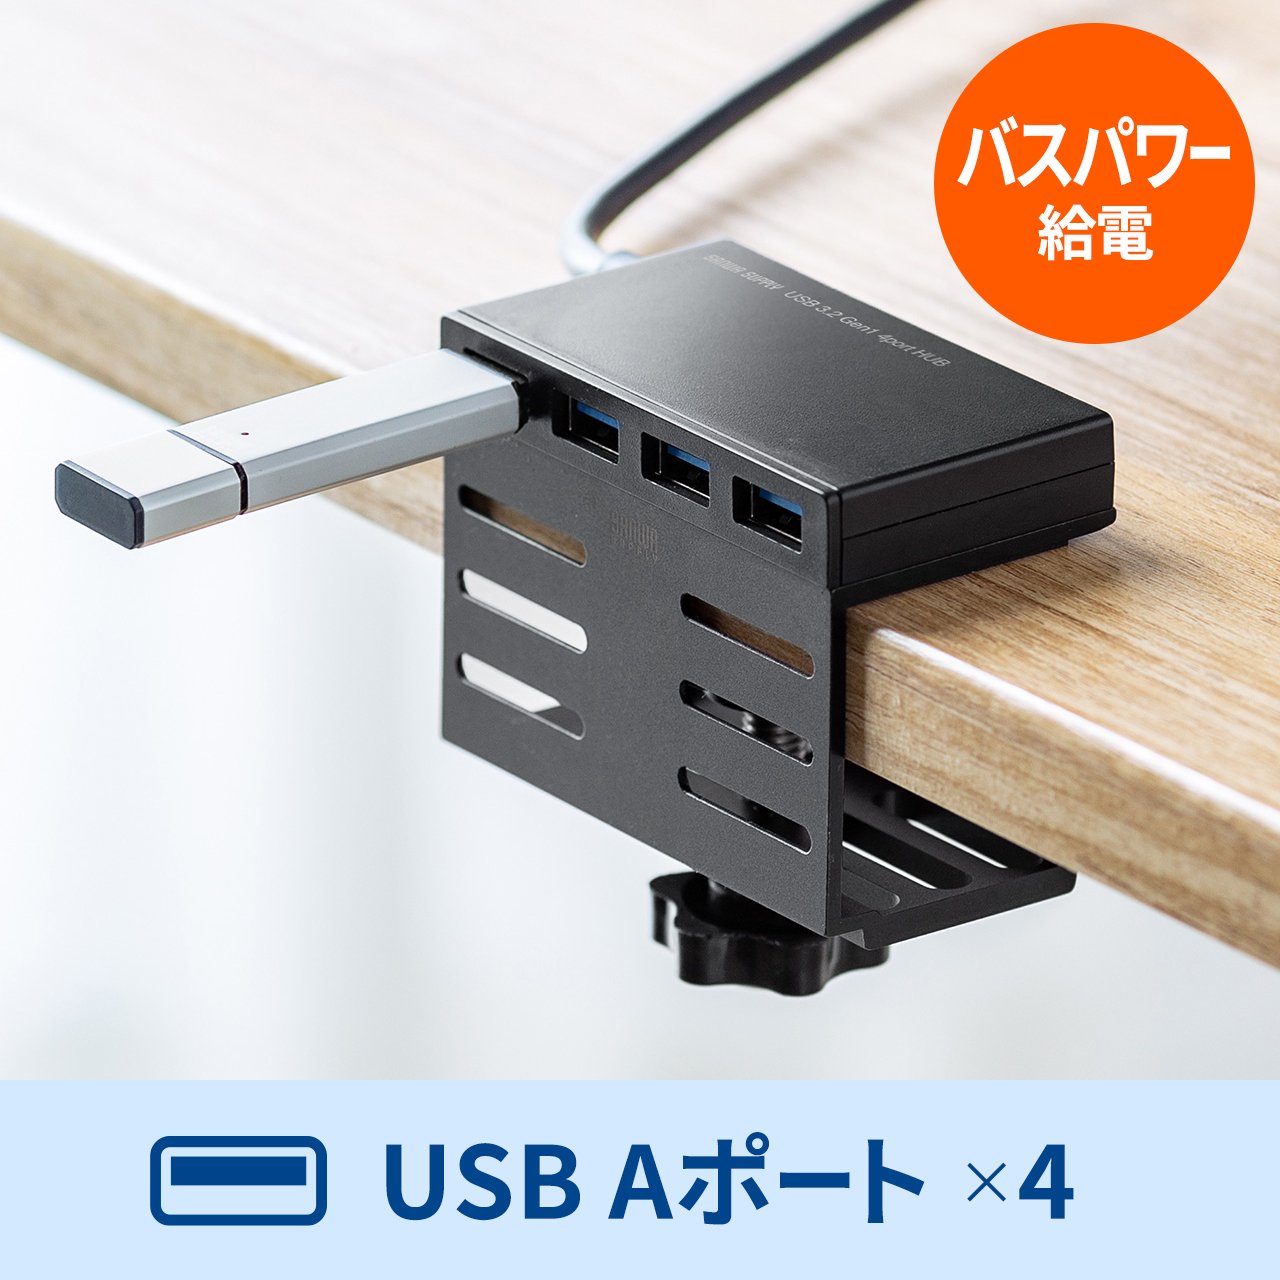 USBハブ クランプ式 USB-A USB3.2 Gen1 4ポート机 固定 ケーブル長1m 400-HUBA097+400-HUBCLAMPのセット  402-HUBA097SET1の販売商品 通販ならサンワダイレクト